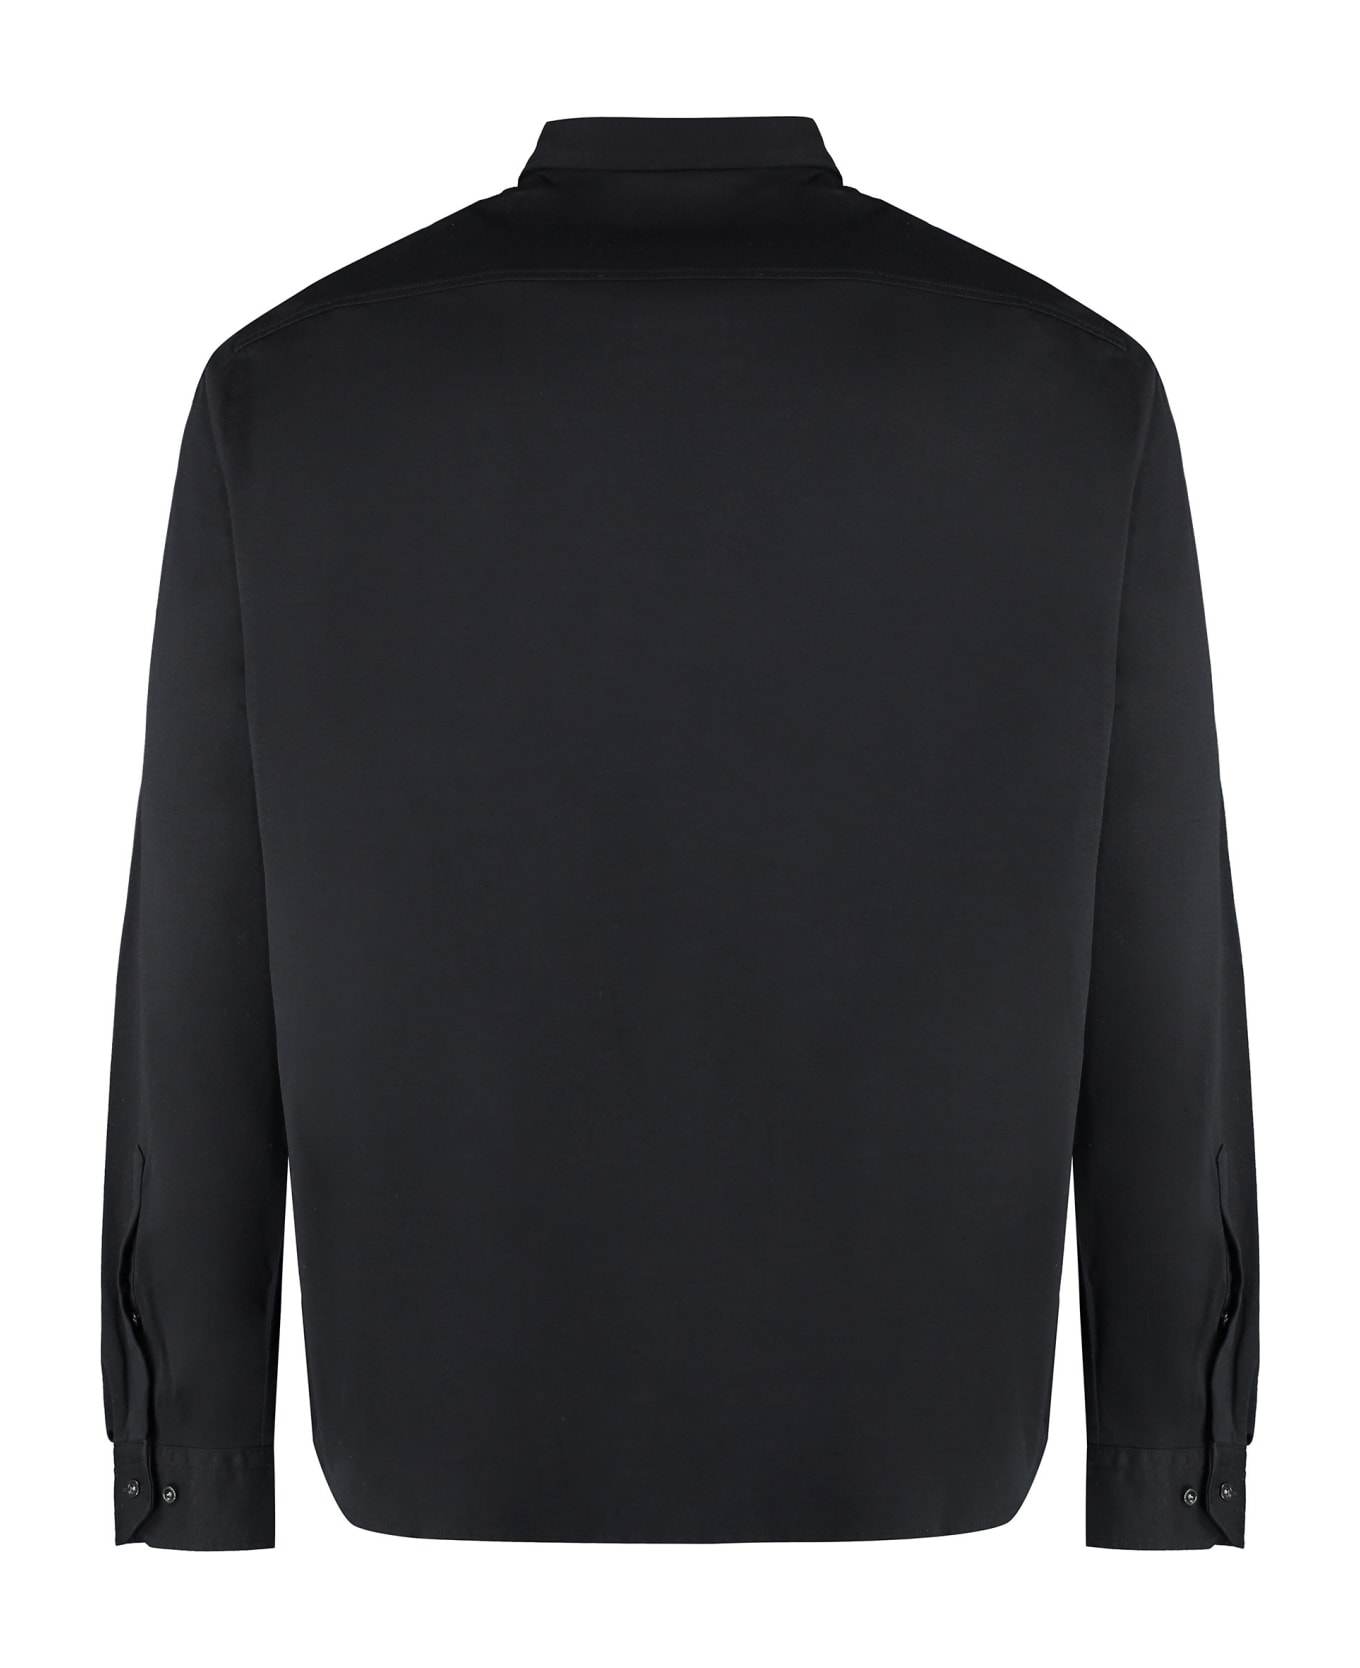 Hugo Boss Button-down Collar Cotton Shirt - Black